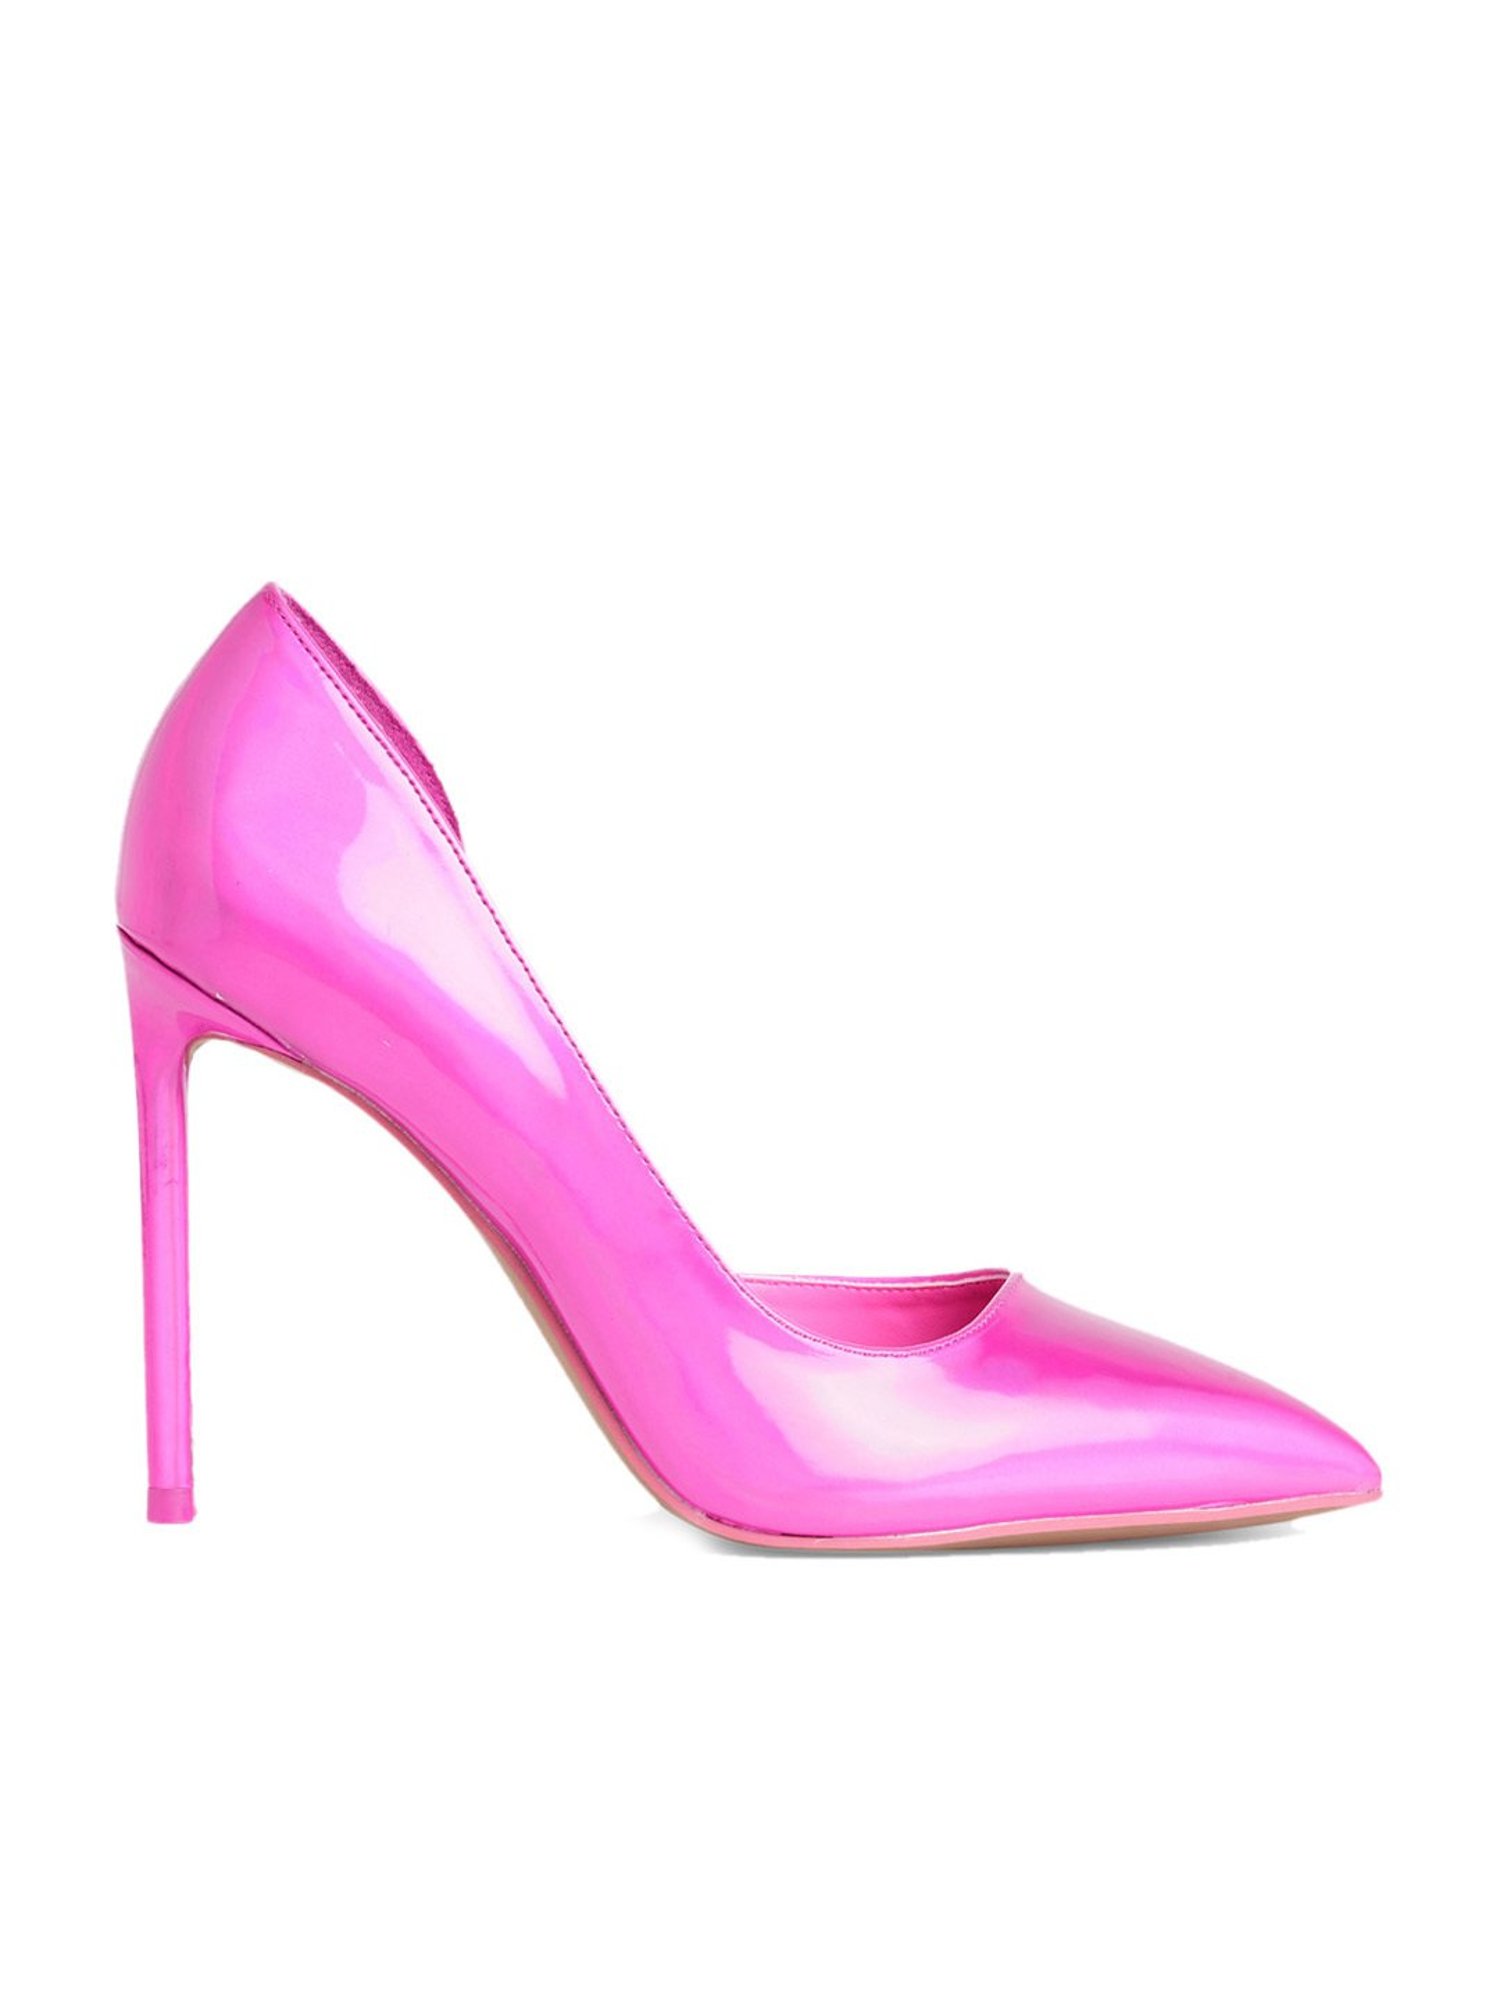 Scheme Women's Classic Slip On Pointy Toe Stiletto High Heel Pumps Shoes ( Hot  Pink, 5.5) - Walmart.com